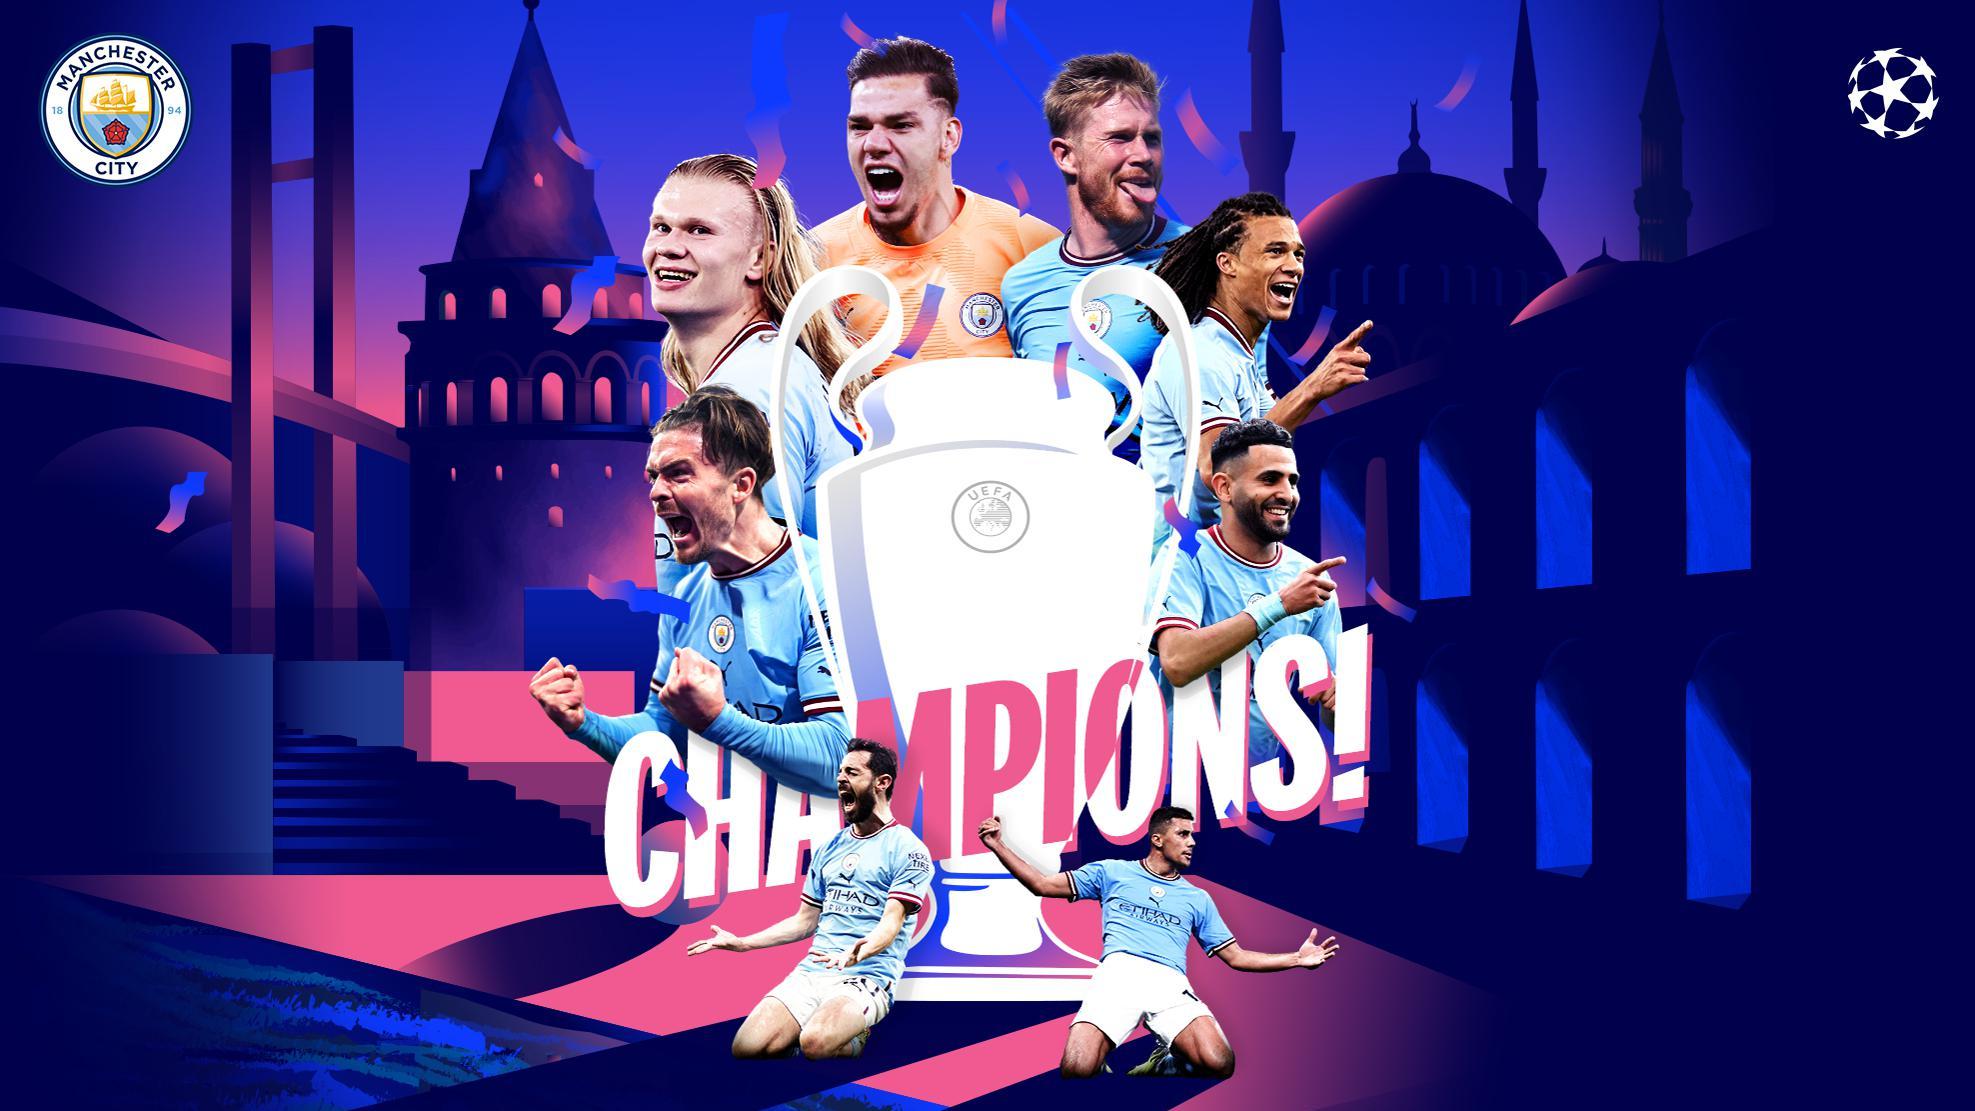 Man City Meet the Champions League winners UEFA Champions